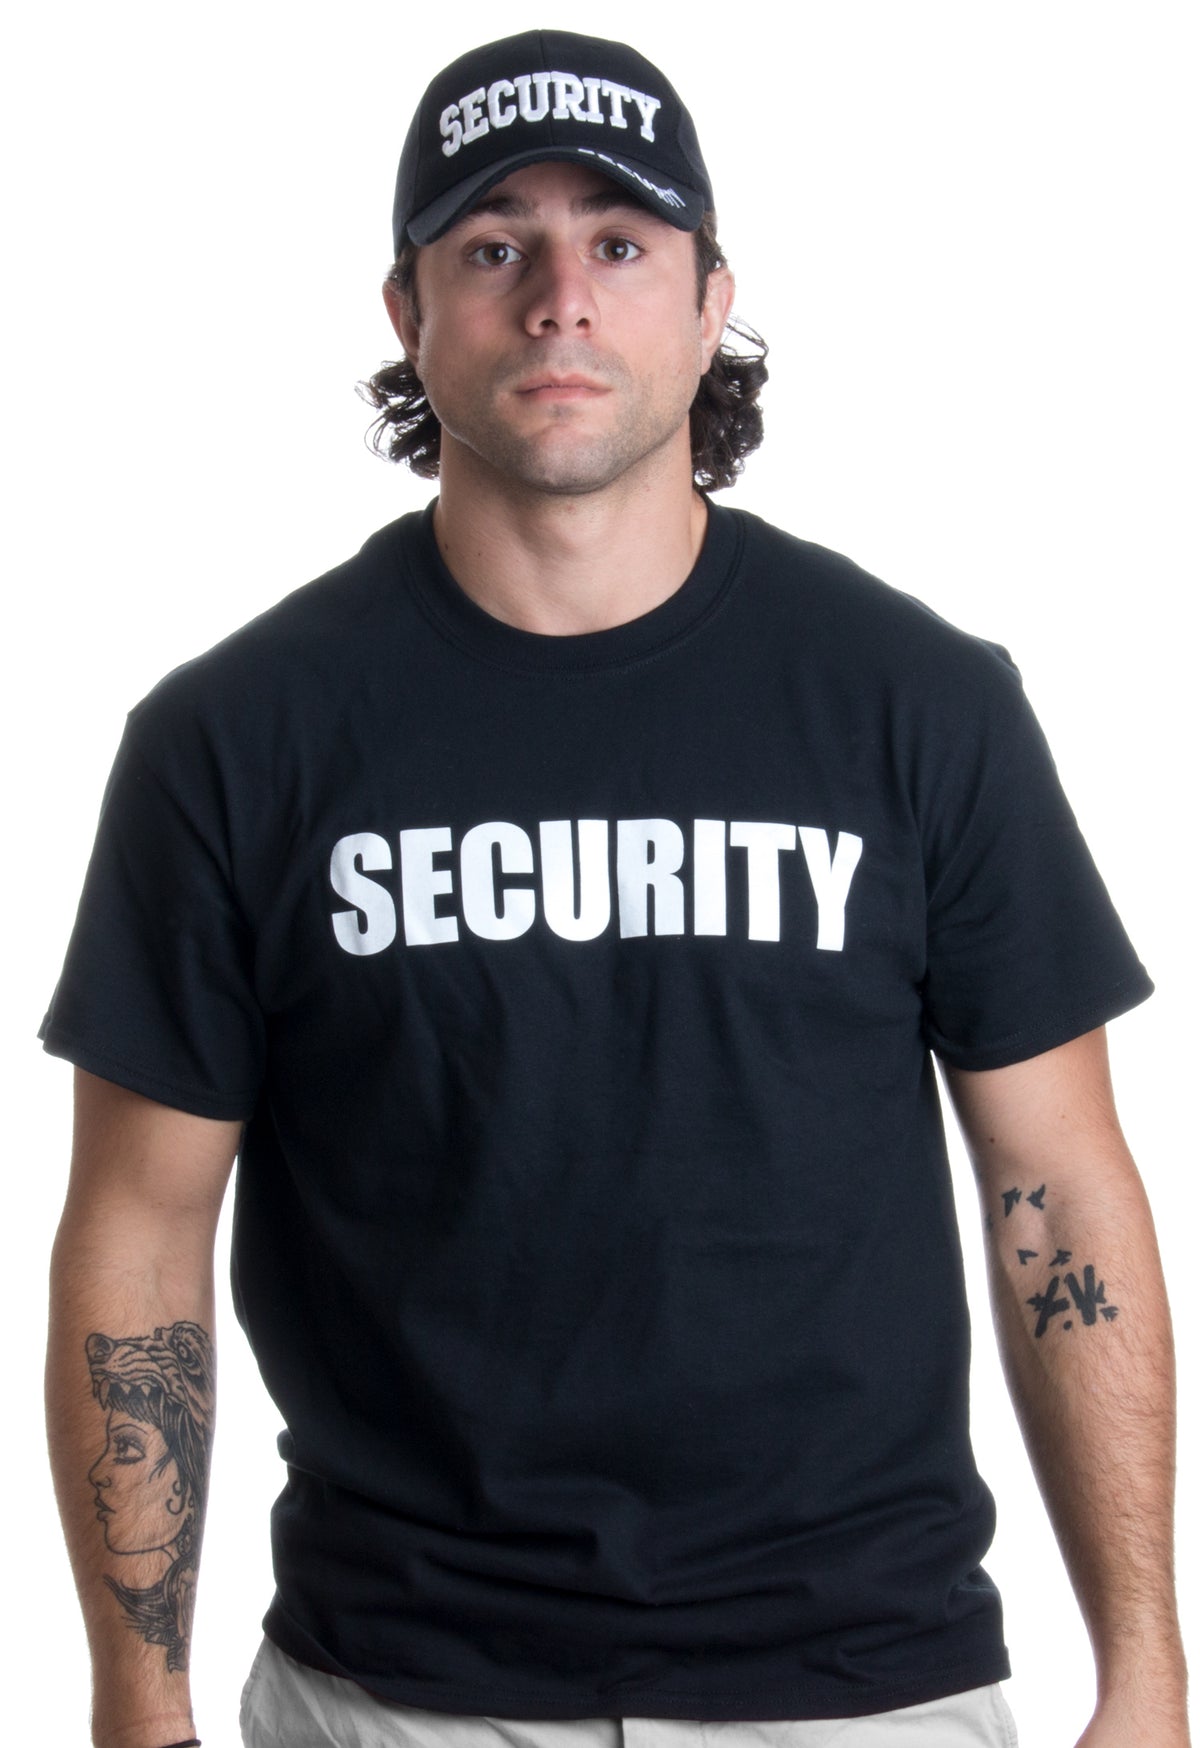 SECURITY Hat & T-shirt Bundle | Matching Security Guard Officer Uniform Kit